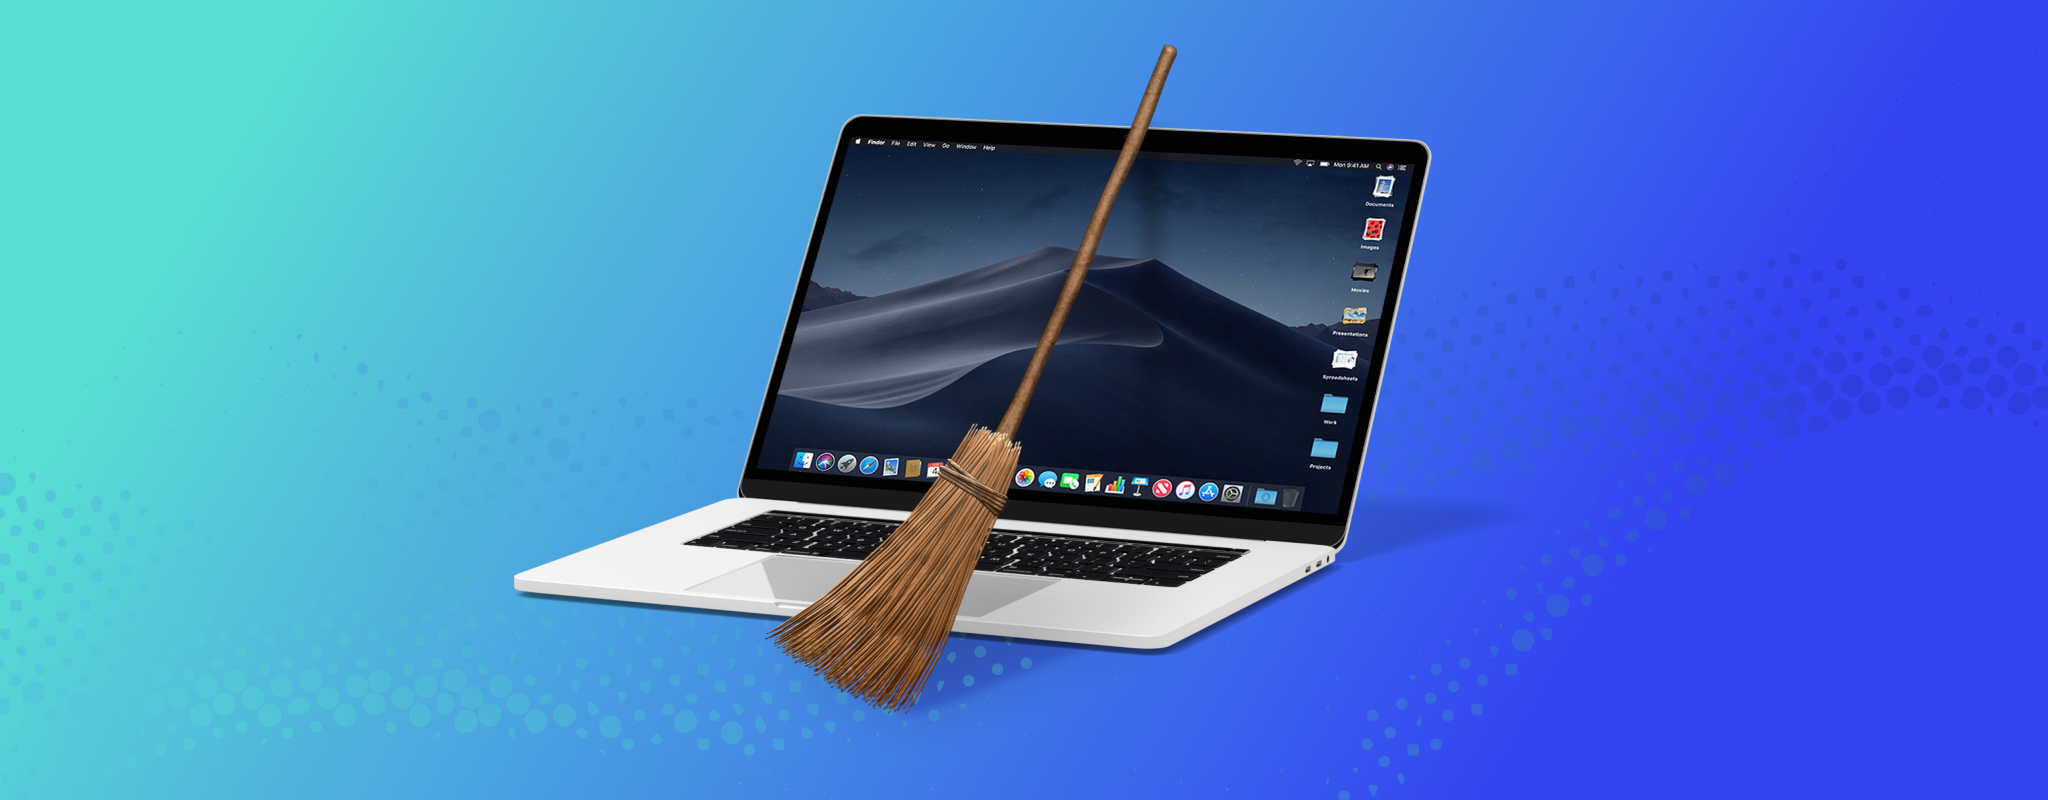 delete mac cleaner